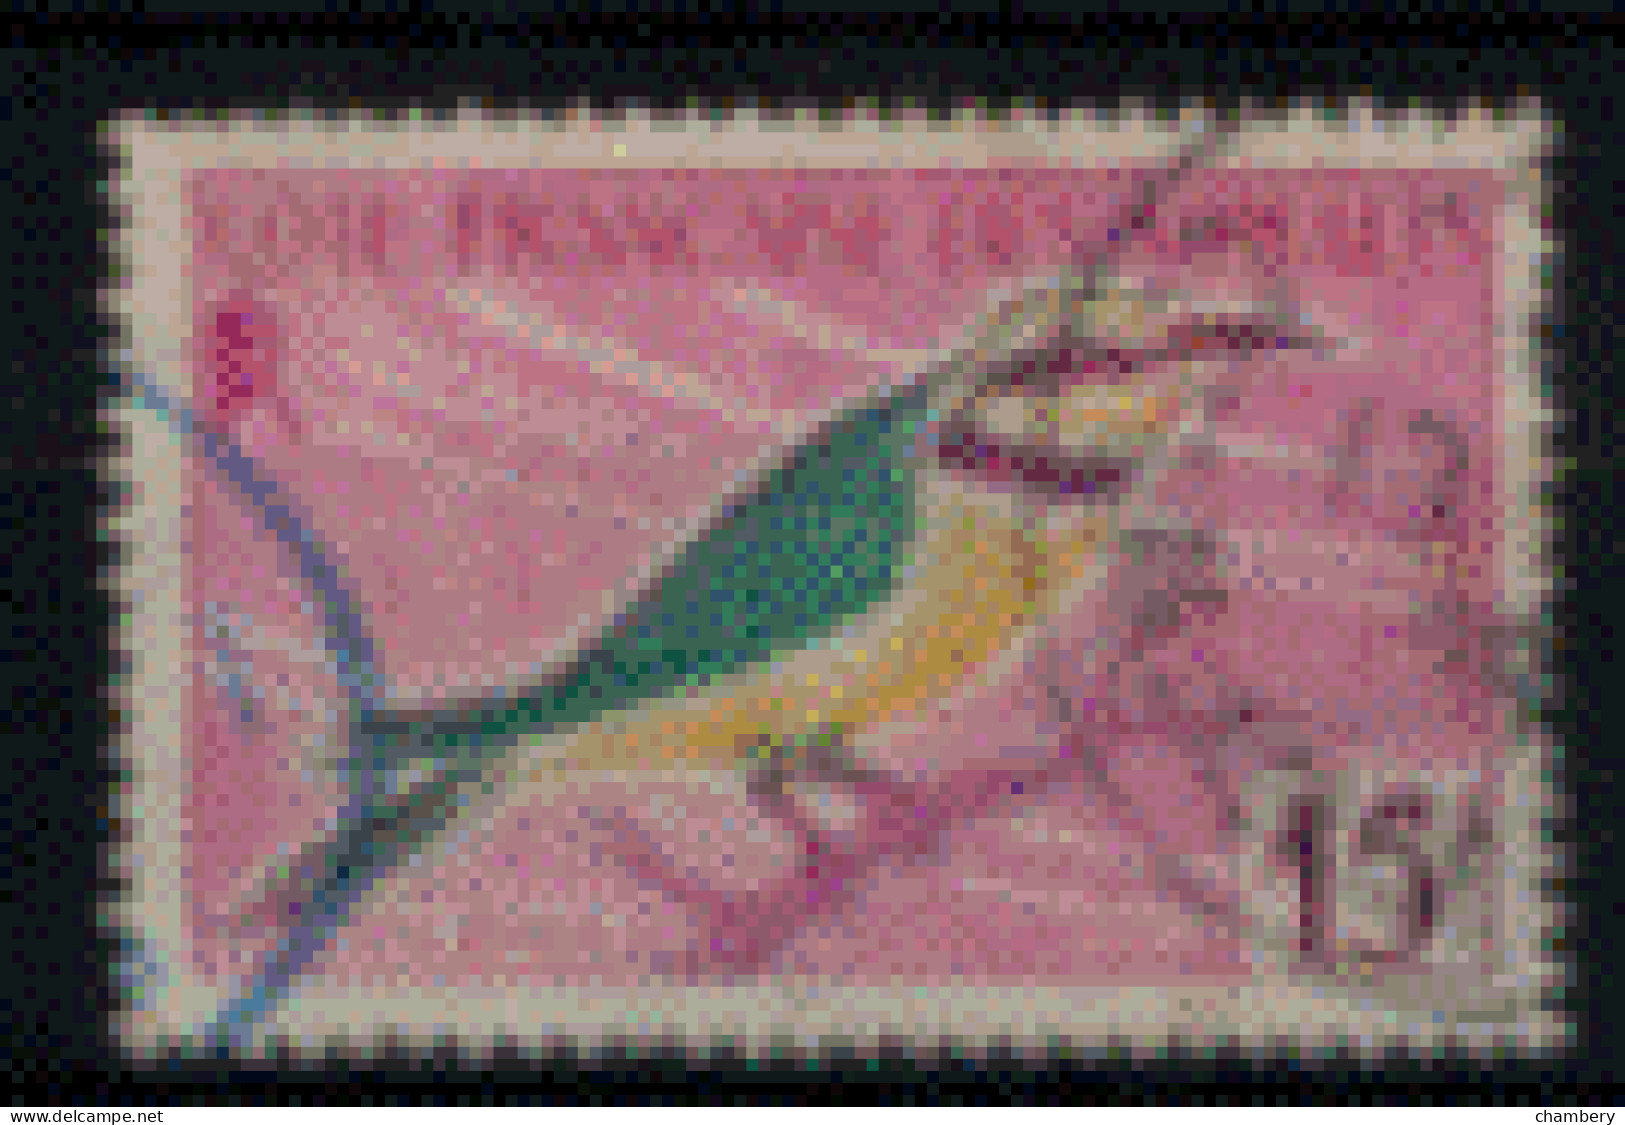 France - Somalies - "Guêpier" - Oblitéré N° 298 De 1959/60 - Used Stamps